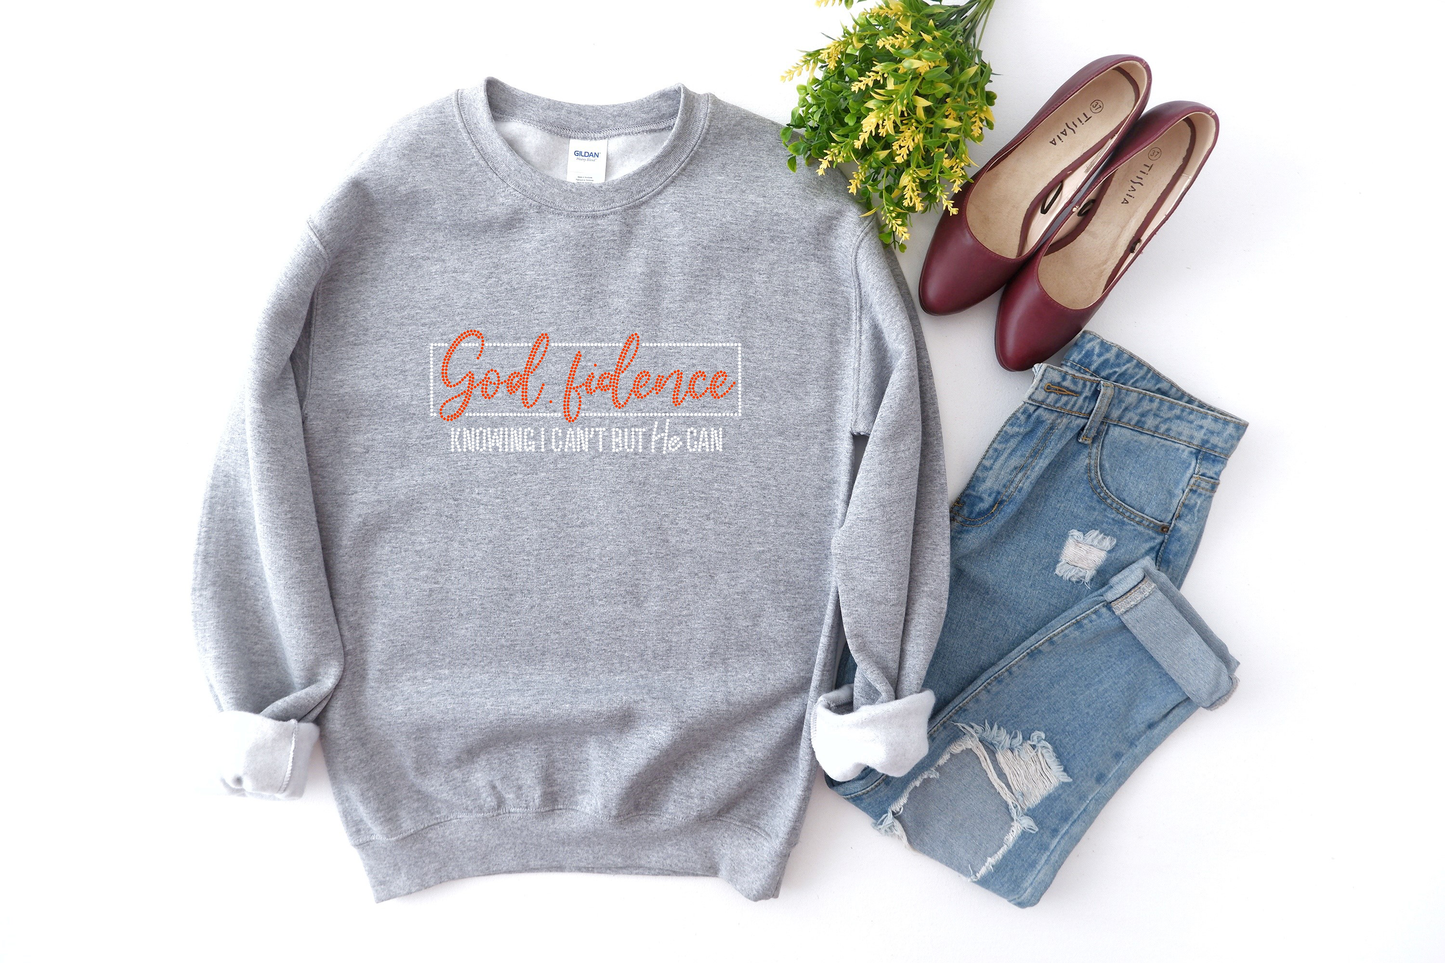 Godfidence Rhinestone hoodies/sweatshirts